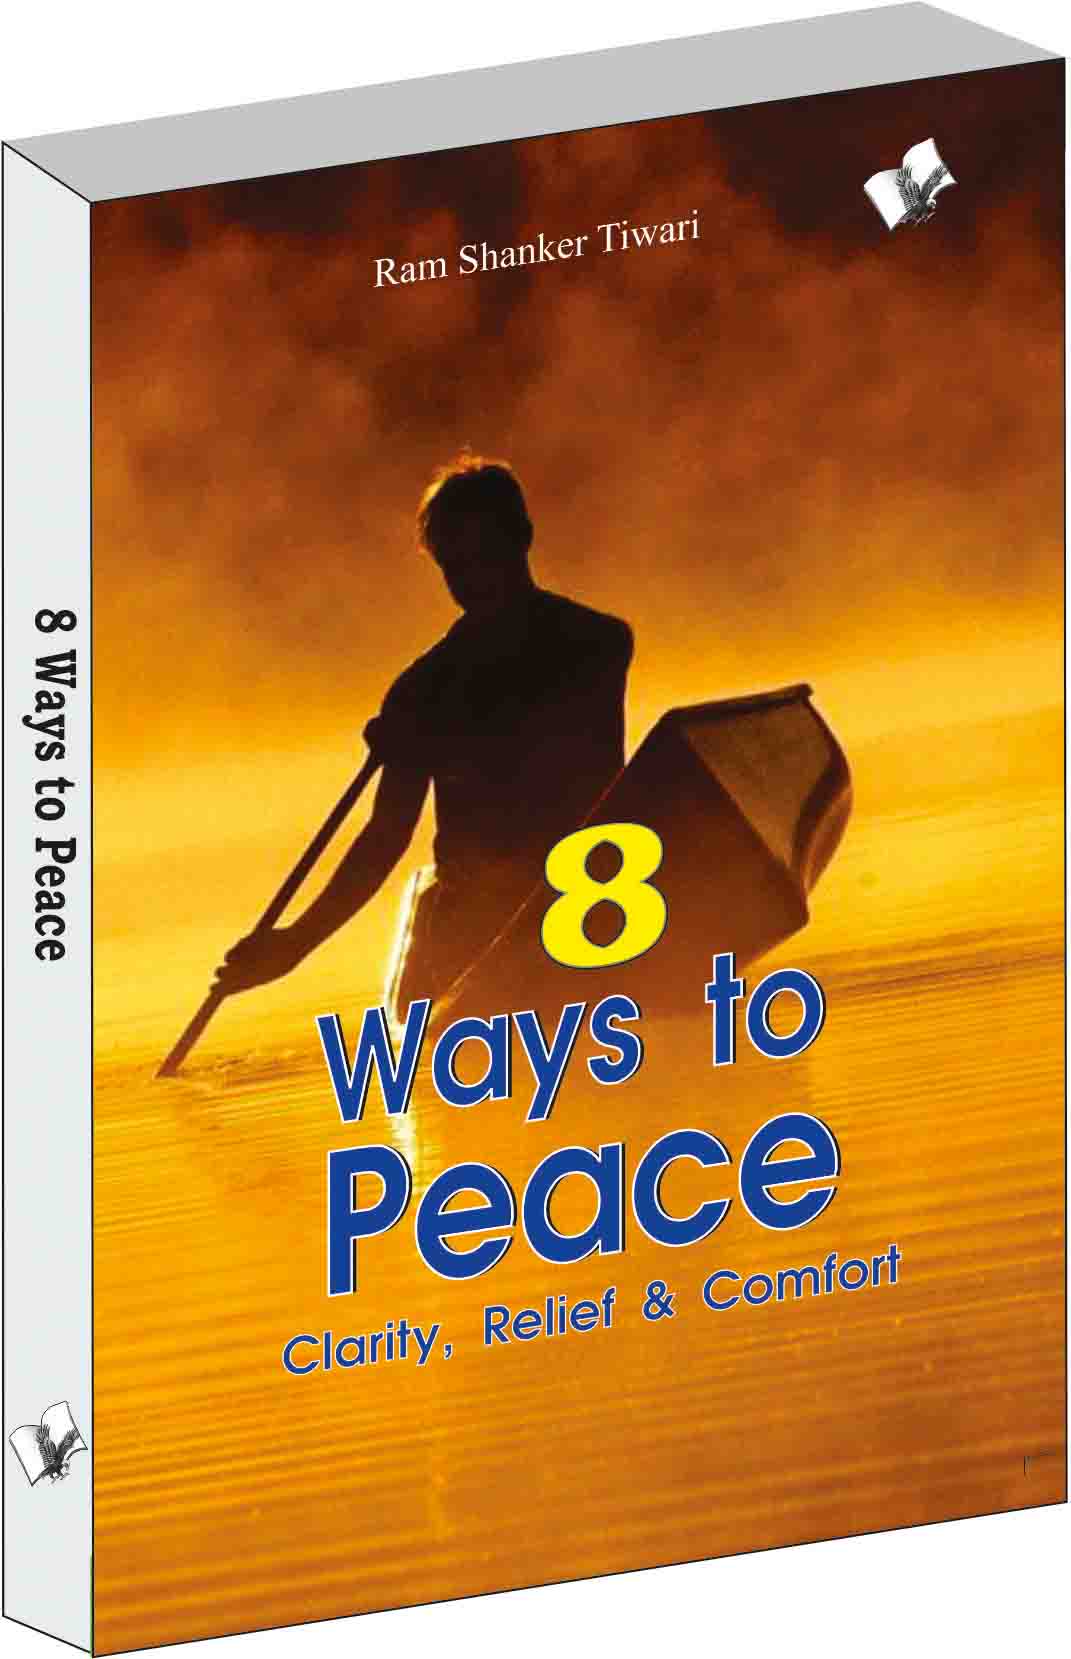 8 ways to peace -Clarity, Relief & Comfort